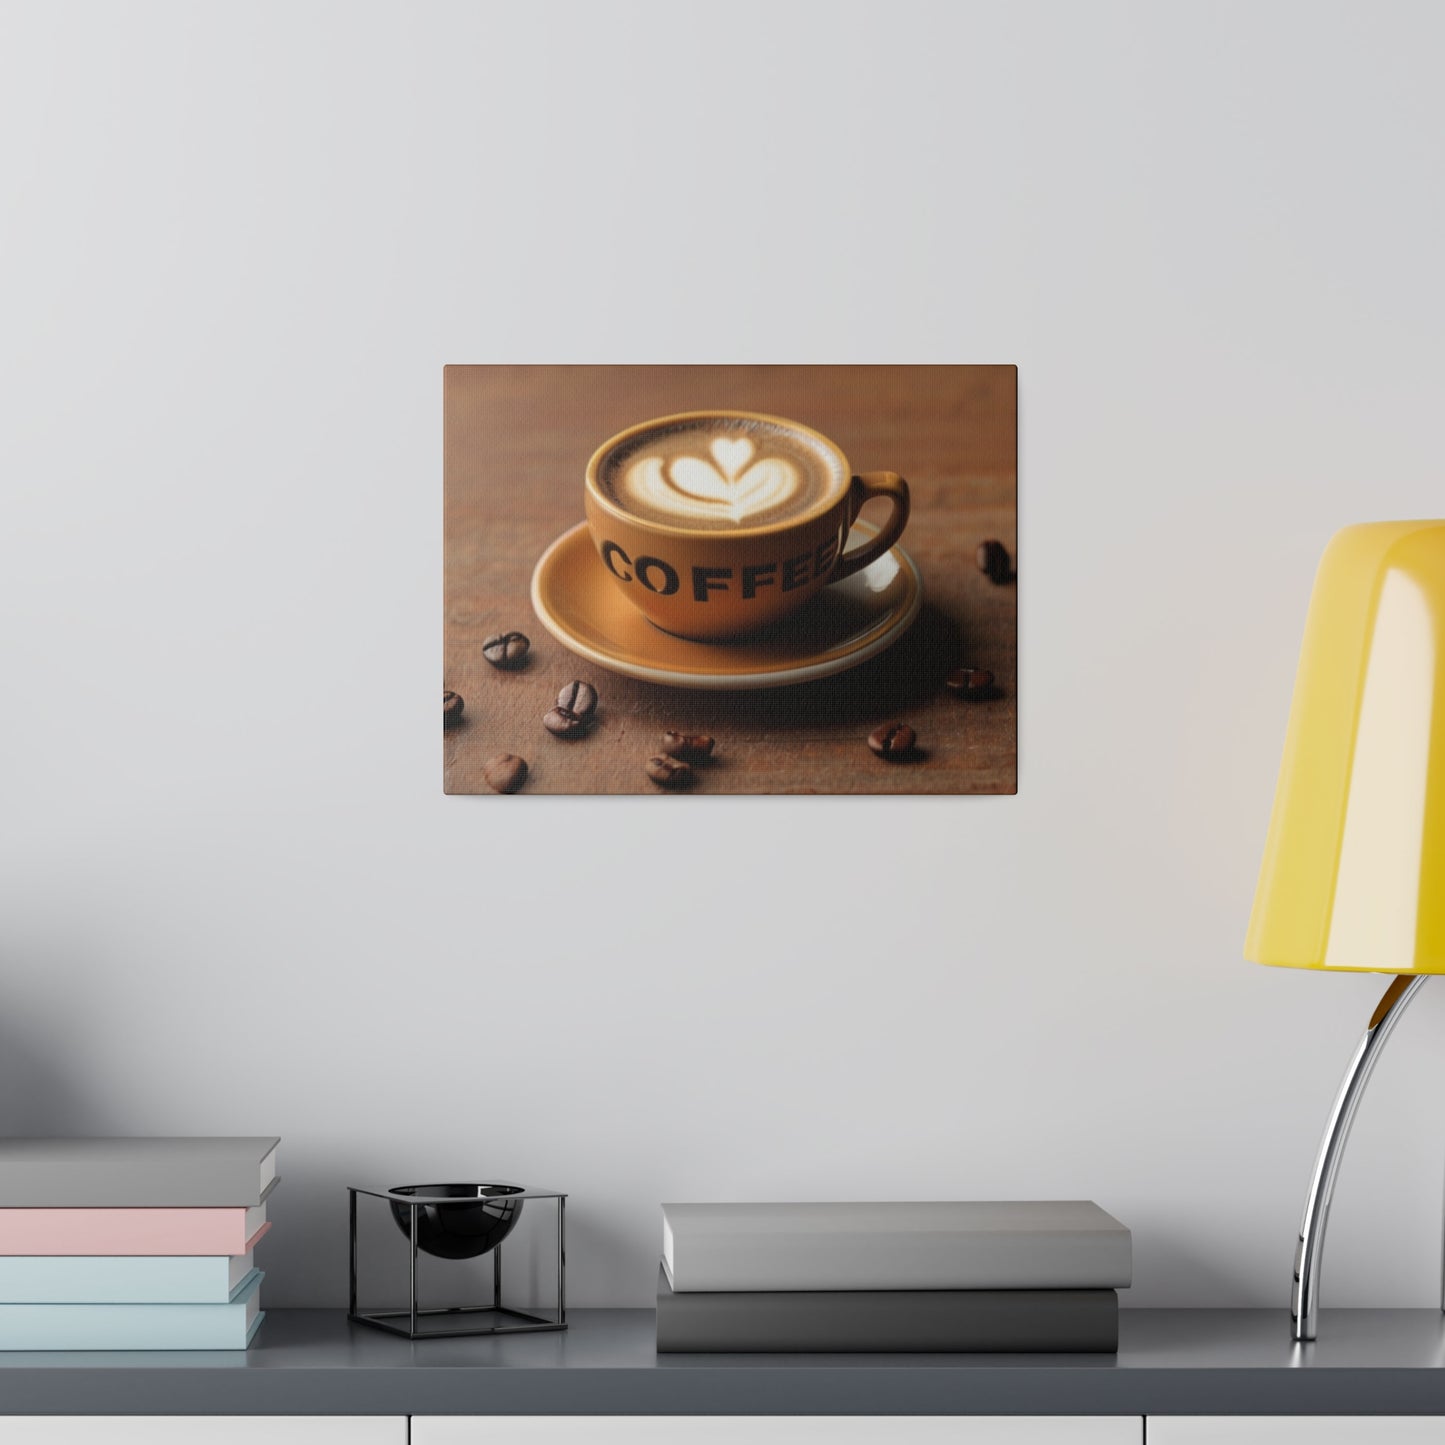 Coffee Mug Love Heart - Matte Canvas, Stretched, 0.75"